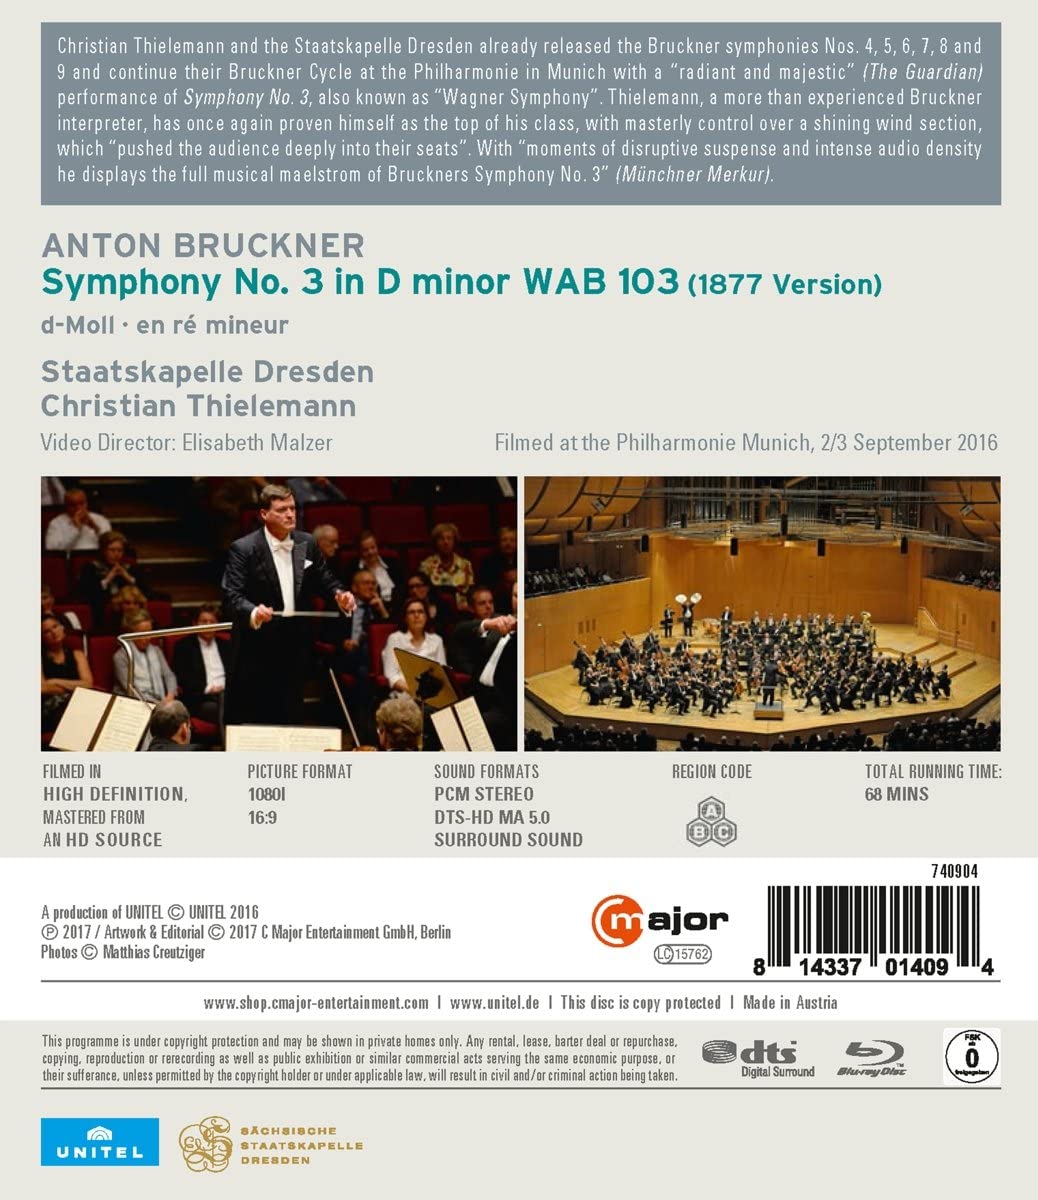 Bruckner: Symphony No. 3 [Staatskapelle Dresden; Christian Thielemann] [C Major Entertainment: 740904] [2017] [Blu-ray]